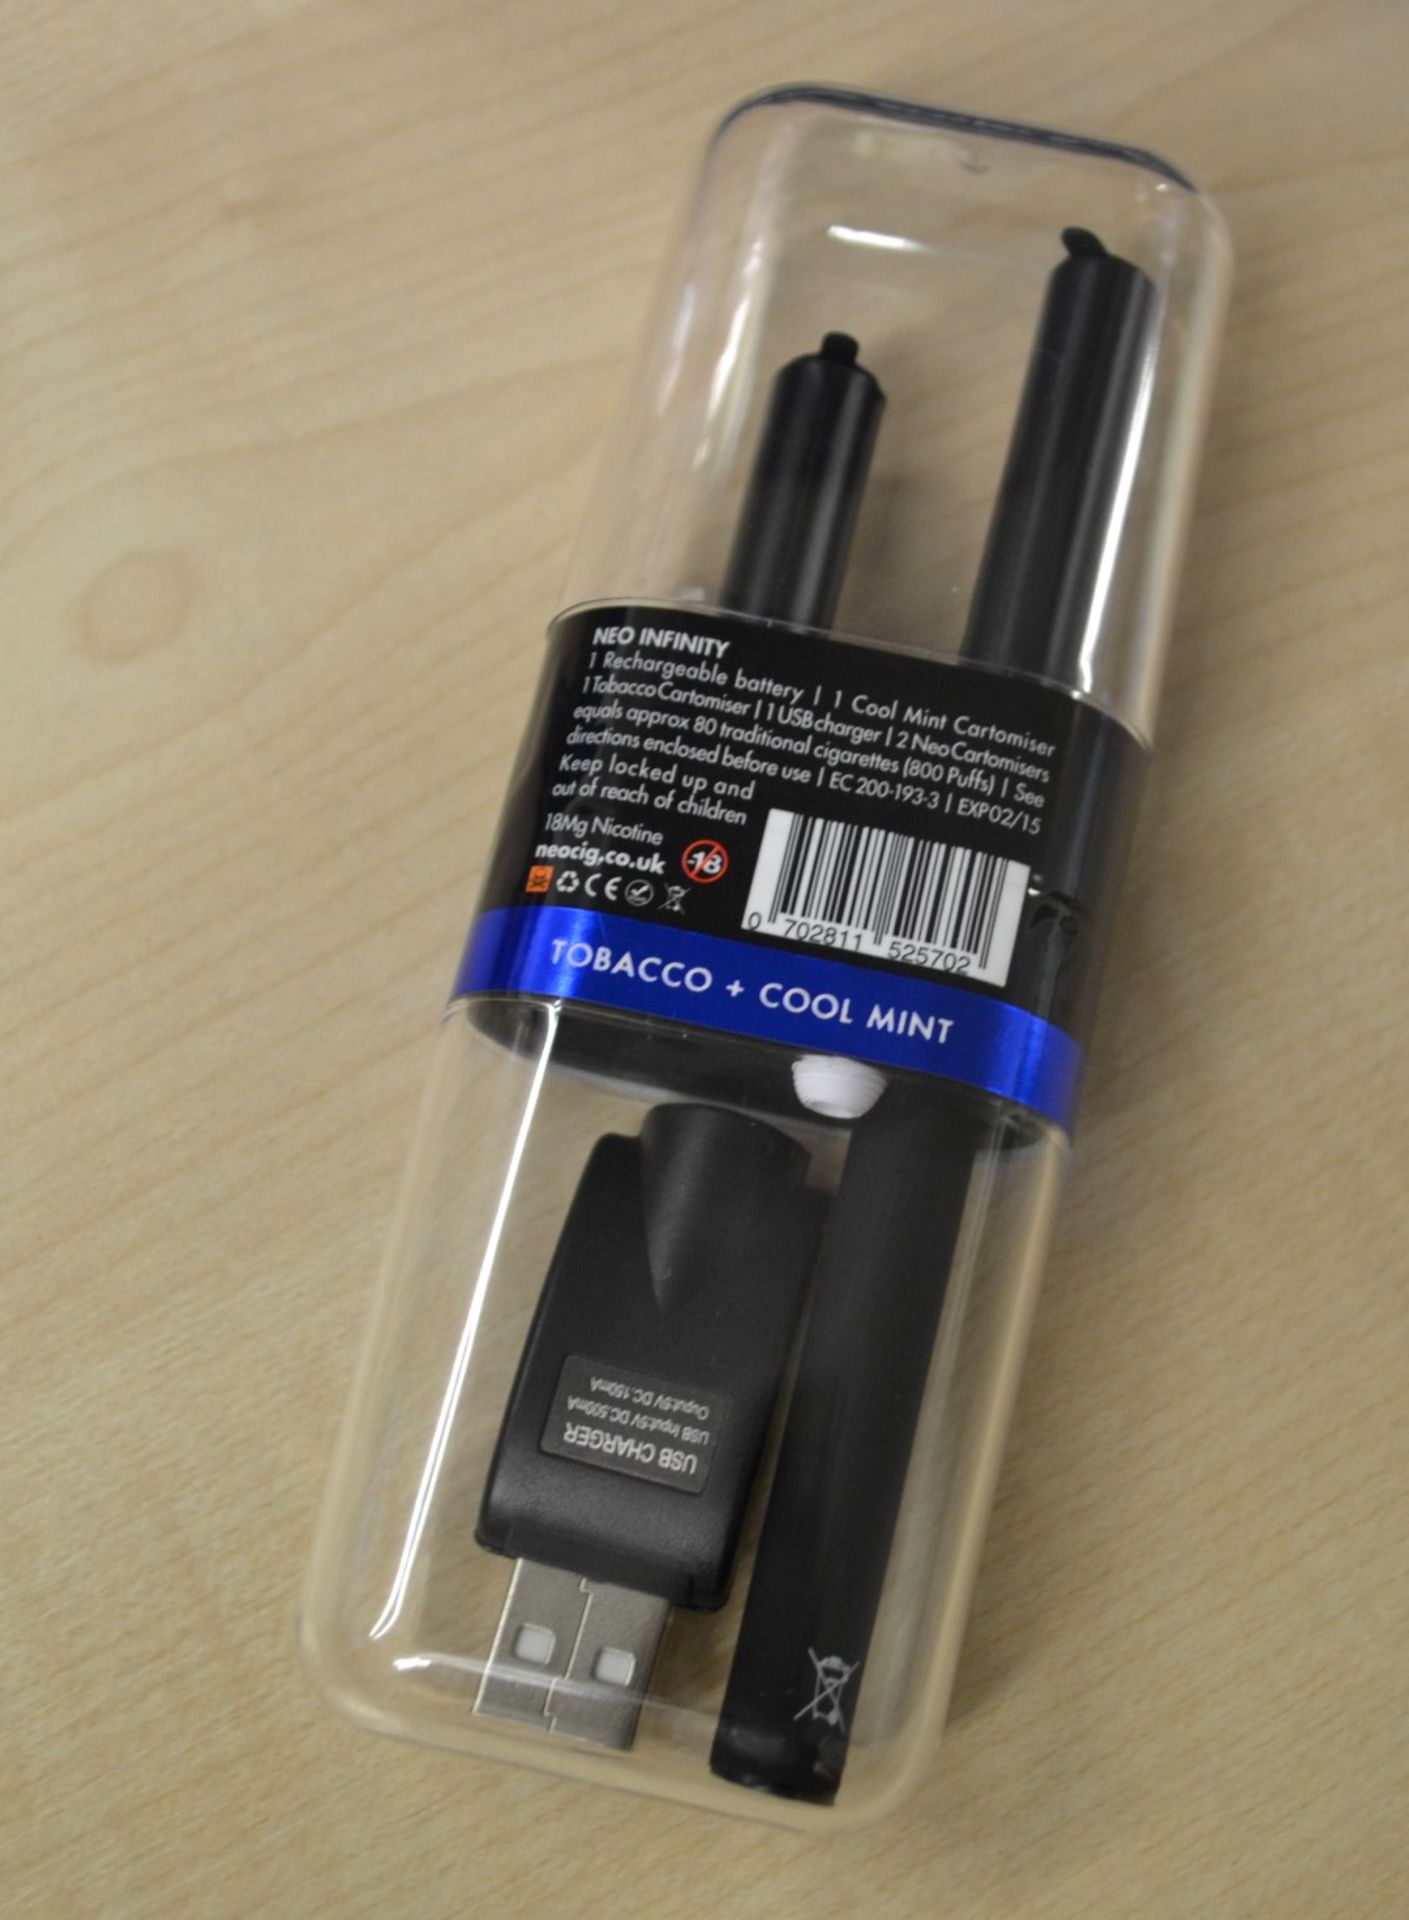 12 x Neo E-Cigarettes Infinity Starter Packs - New & Sealed Stock - CL185 - Ref: DRTISP - Location: - Image 13 of 13